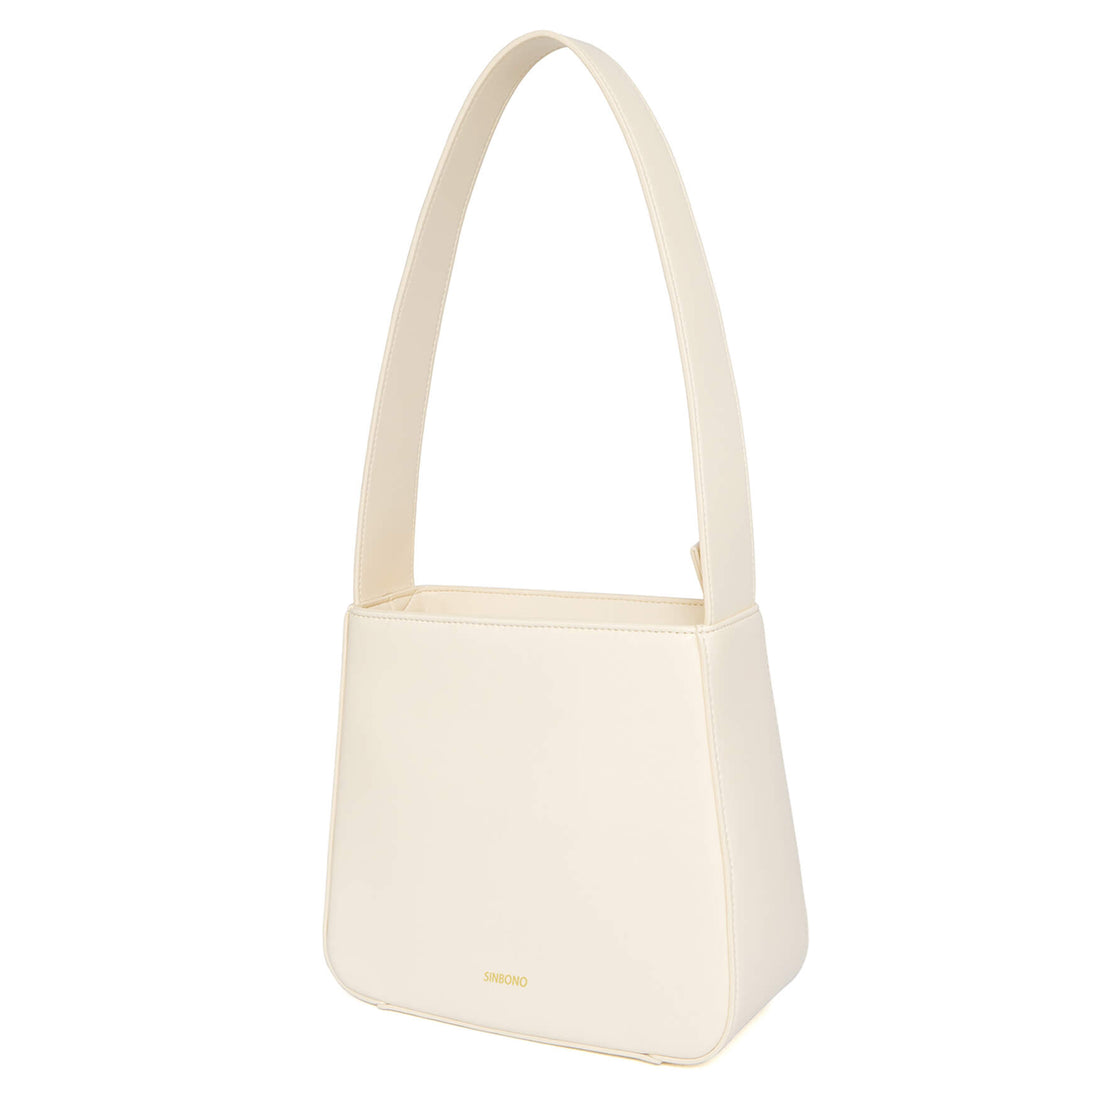 SINBONO Betty Shoulder Bag Ivory - Eco-Friendly Leather Bag